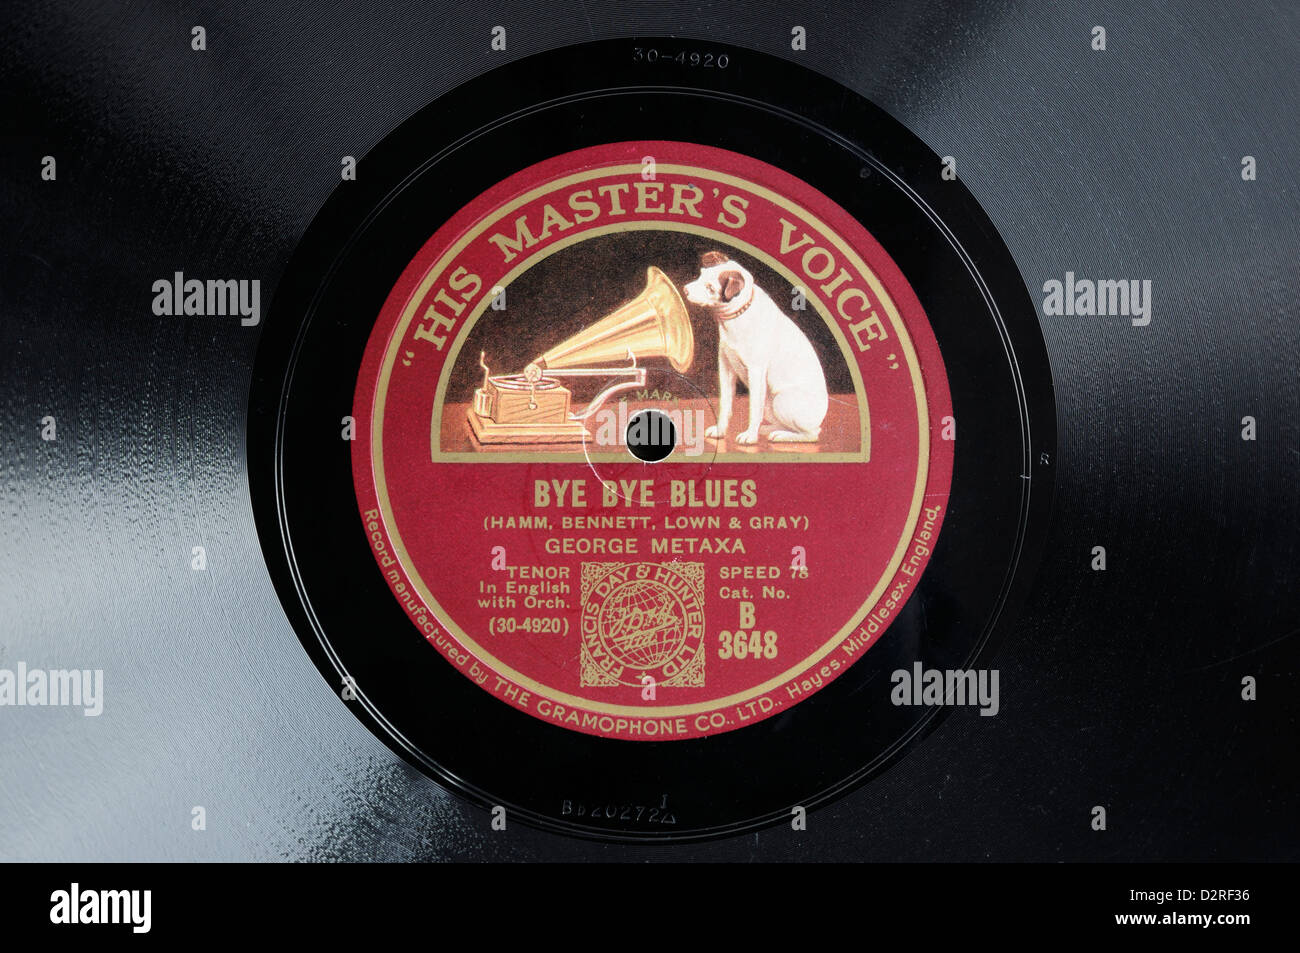 Old 78 Rpm Gramophone Records Banque d'image et photos - Alamy